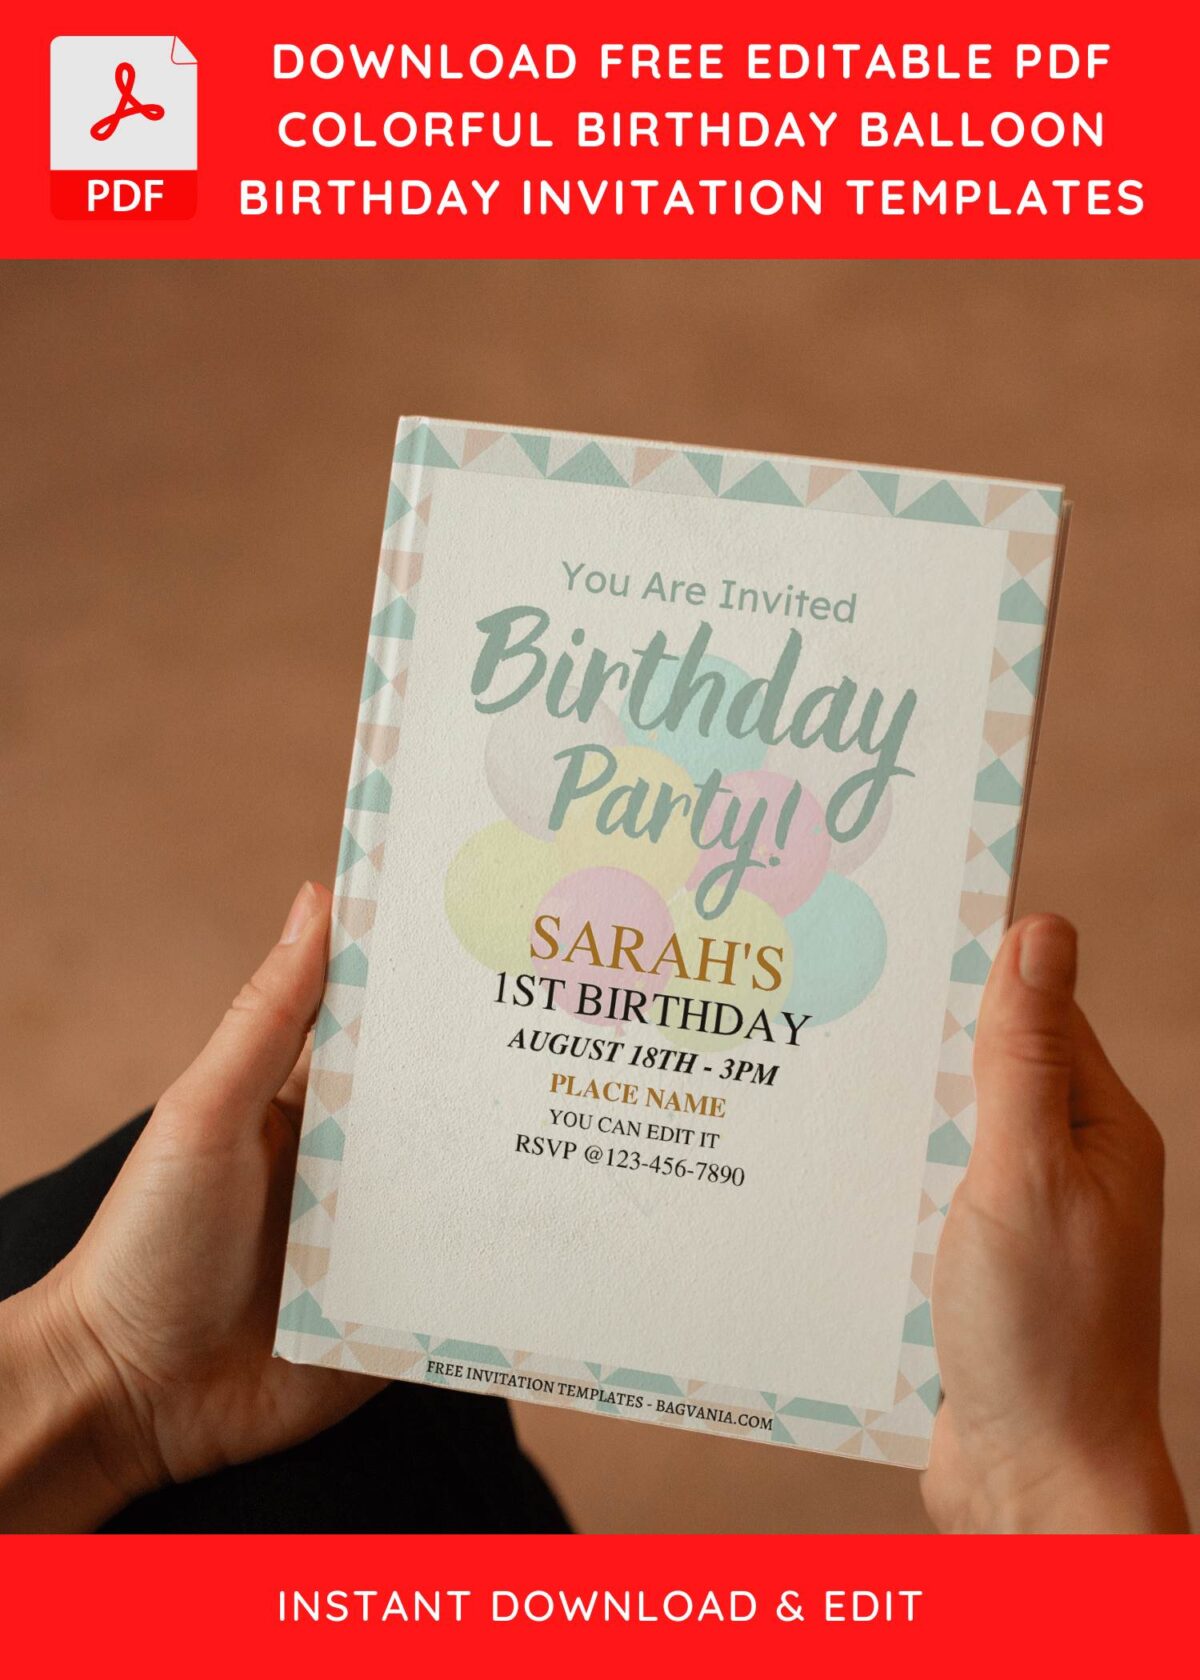 (Free Editable PDF) Chic Birthday Invitation Templates For Kids E